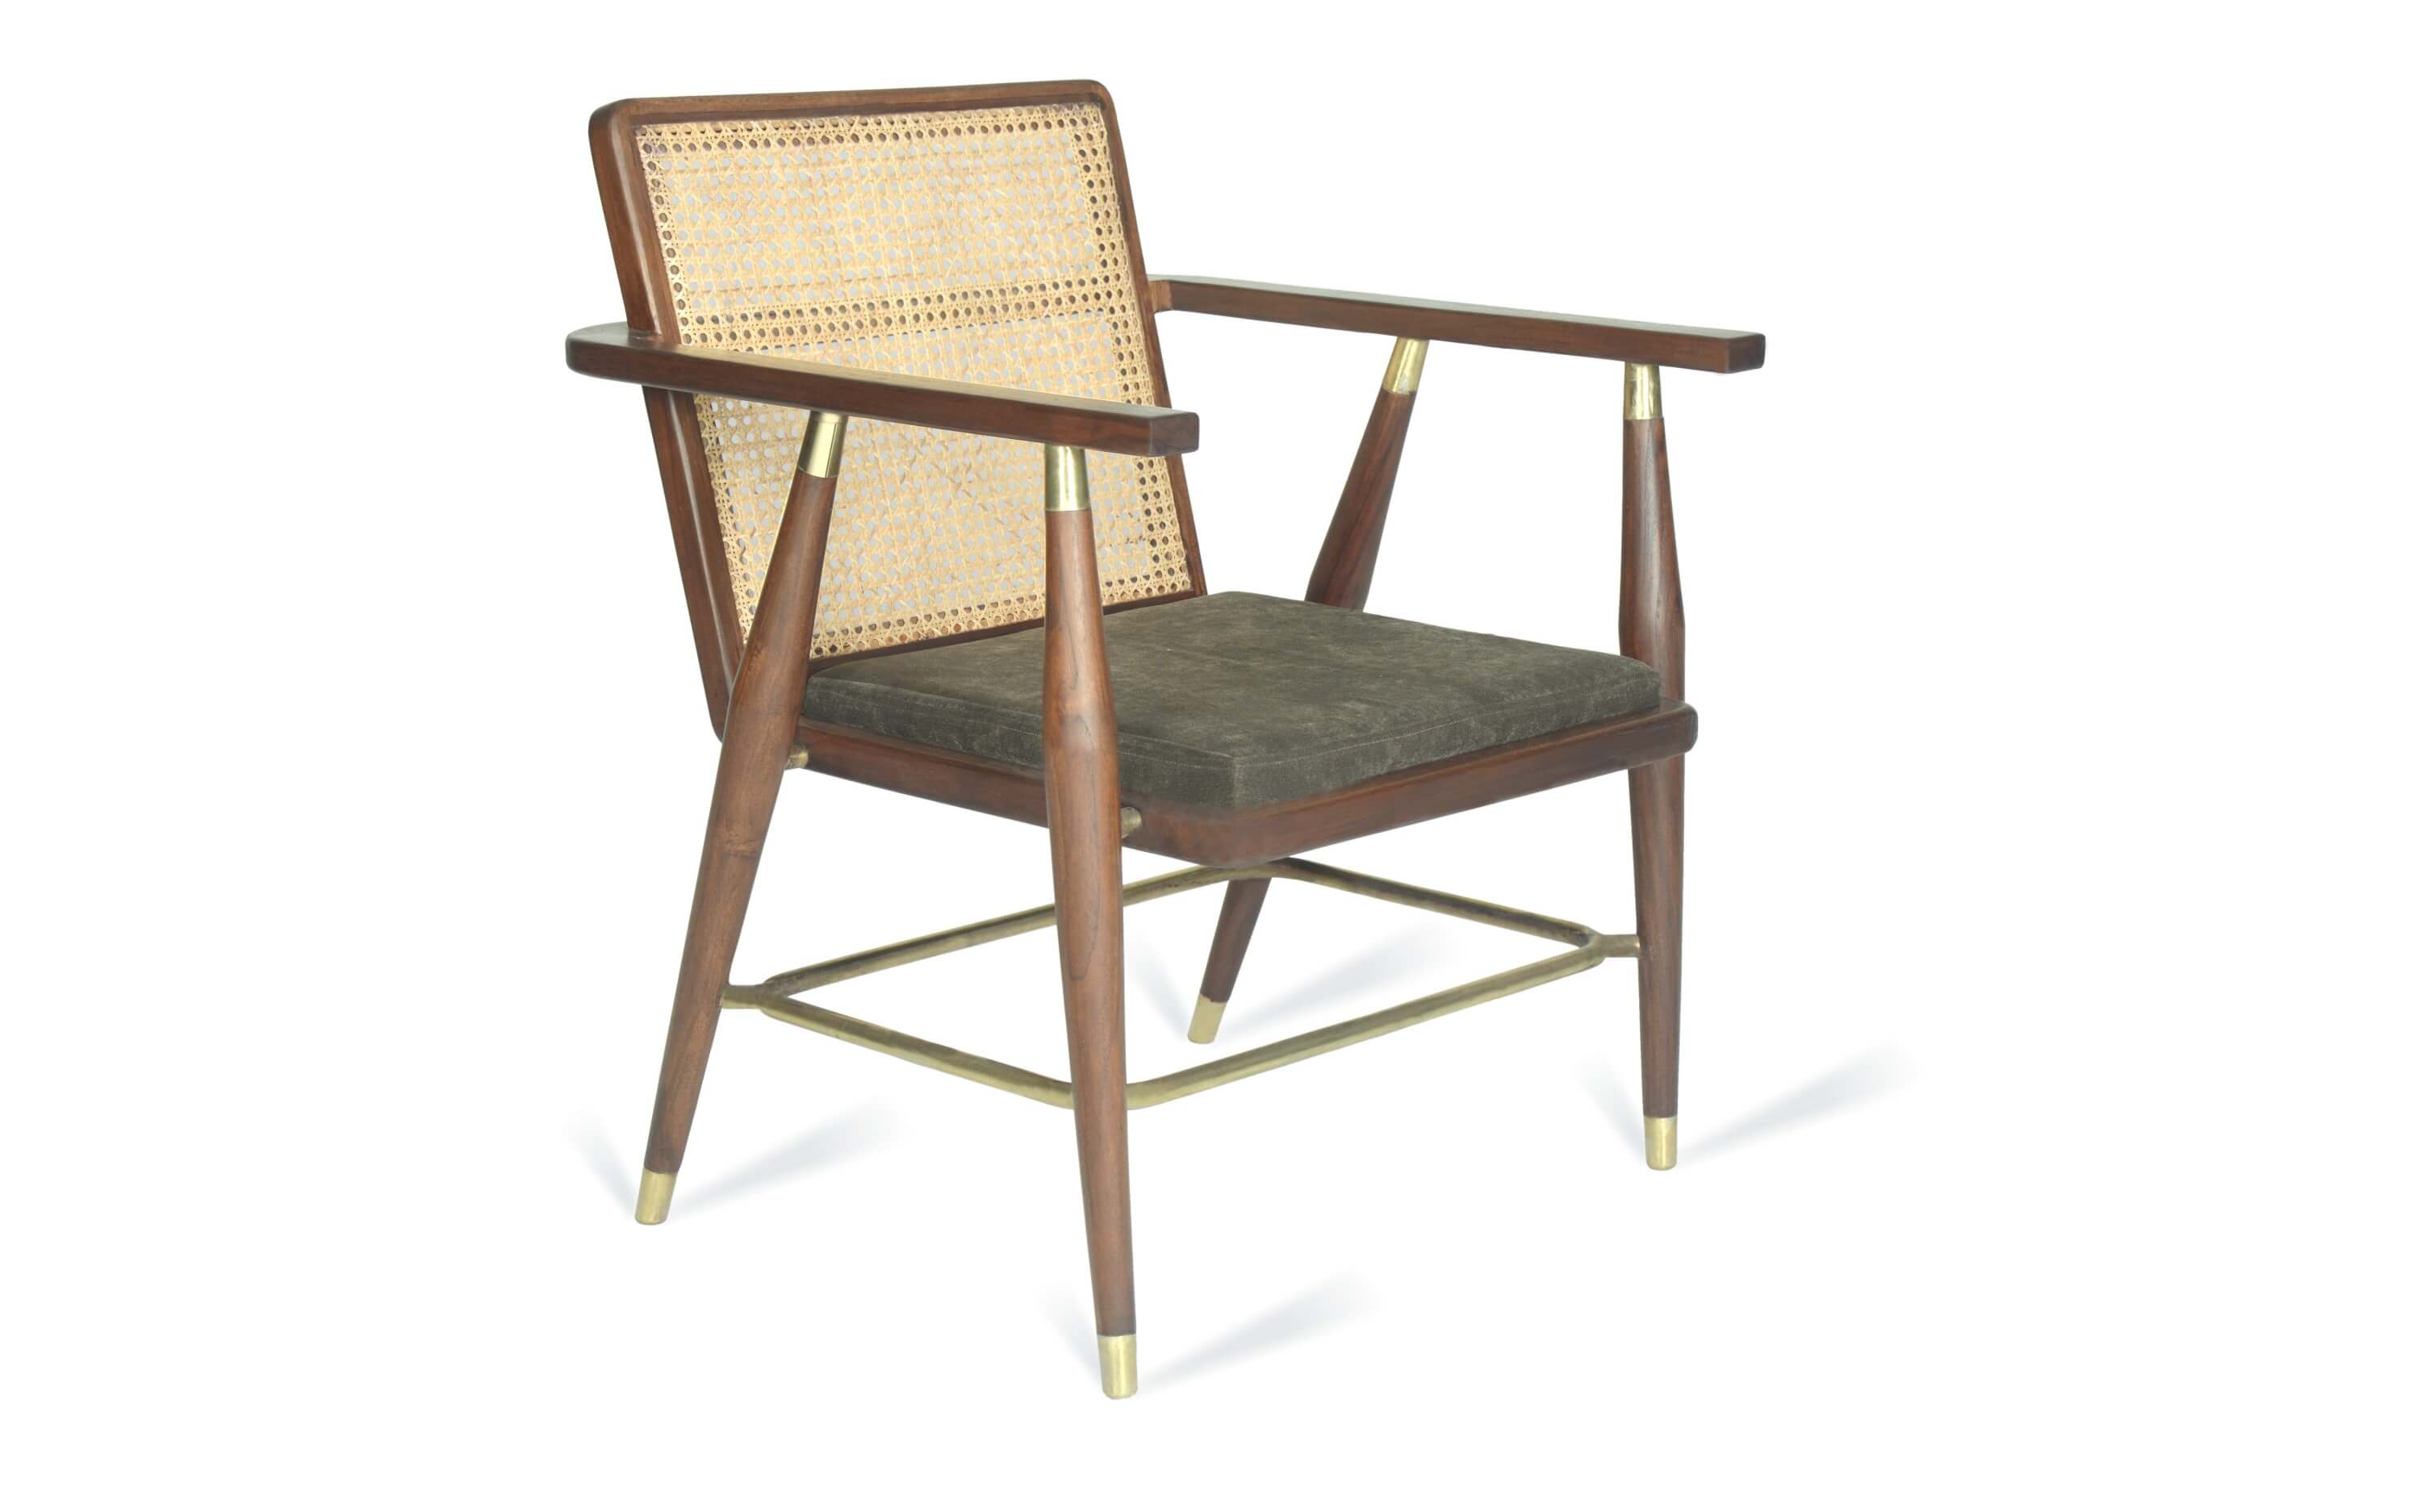 Woven Cane Lounge Chair. Navah Lounge Chair - Orange Tree Home Pvt. Ltd.